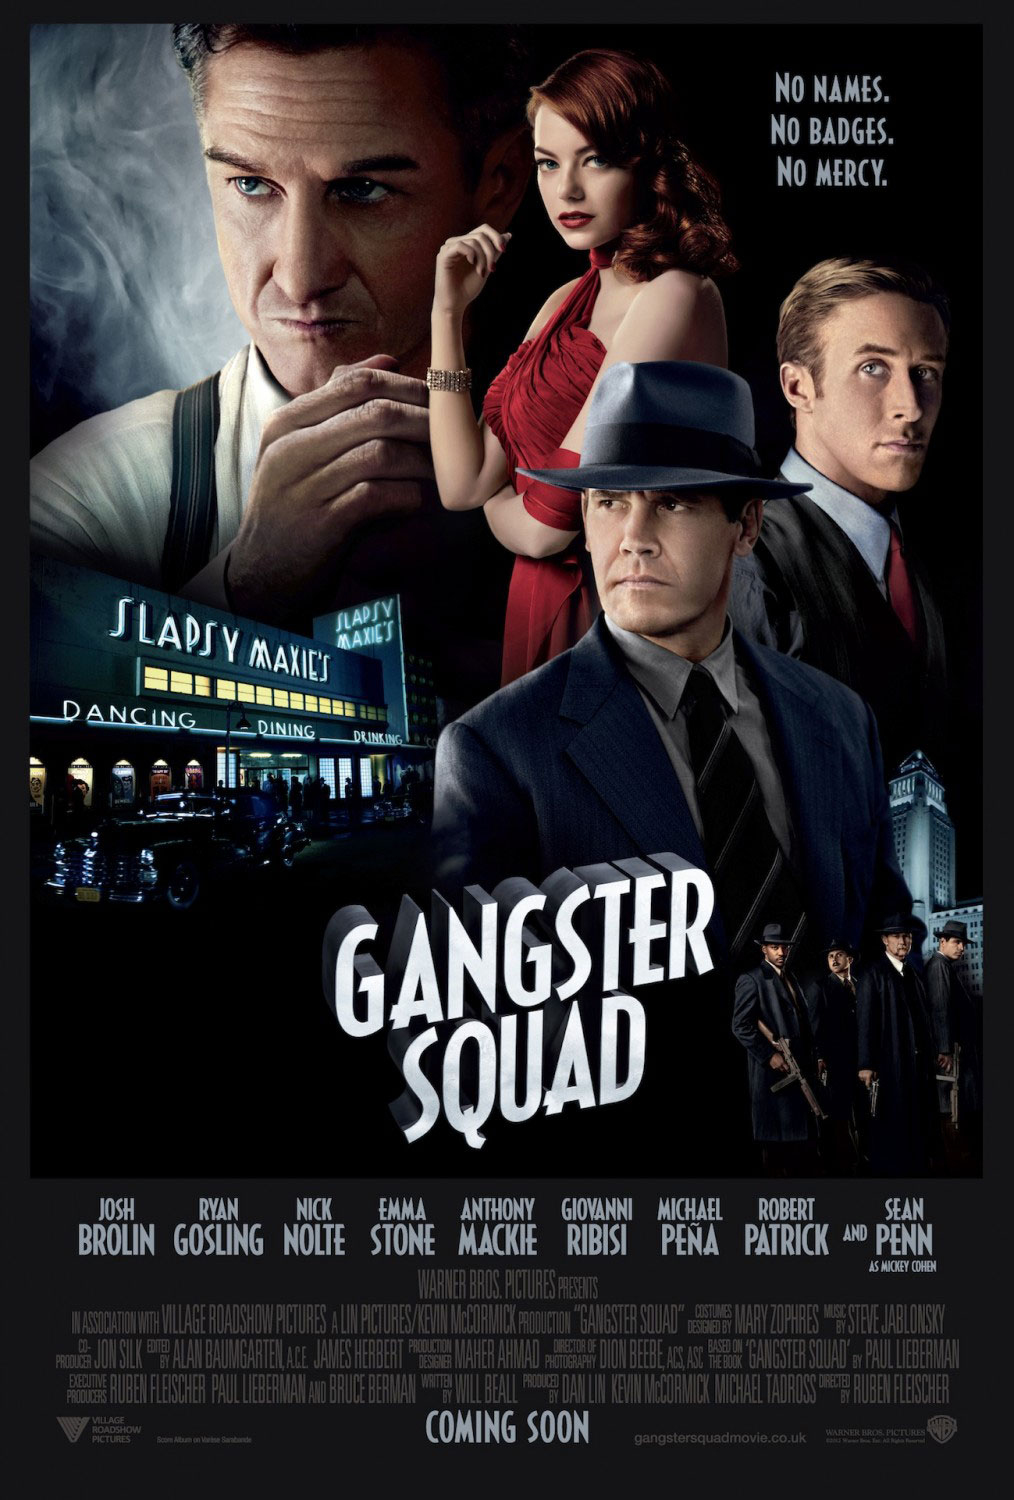 Gangster Squad - Movie Poster #8 (Original)